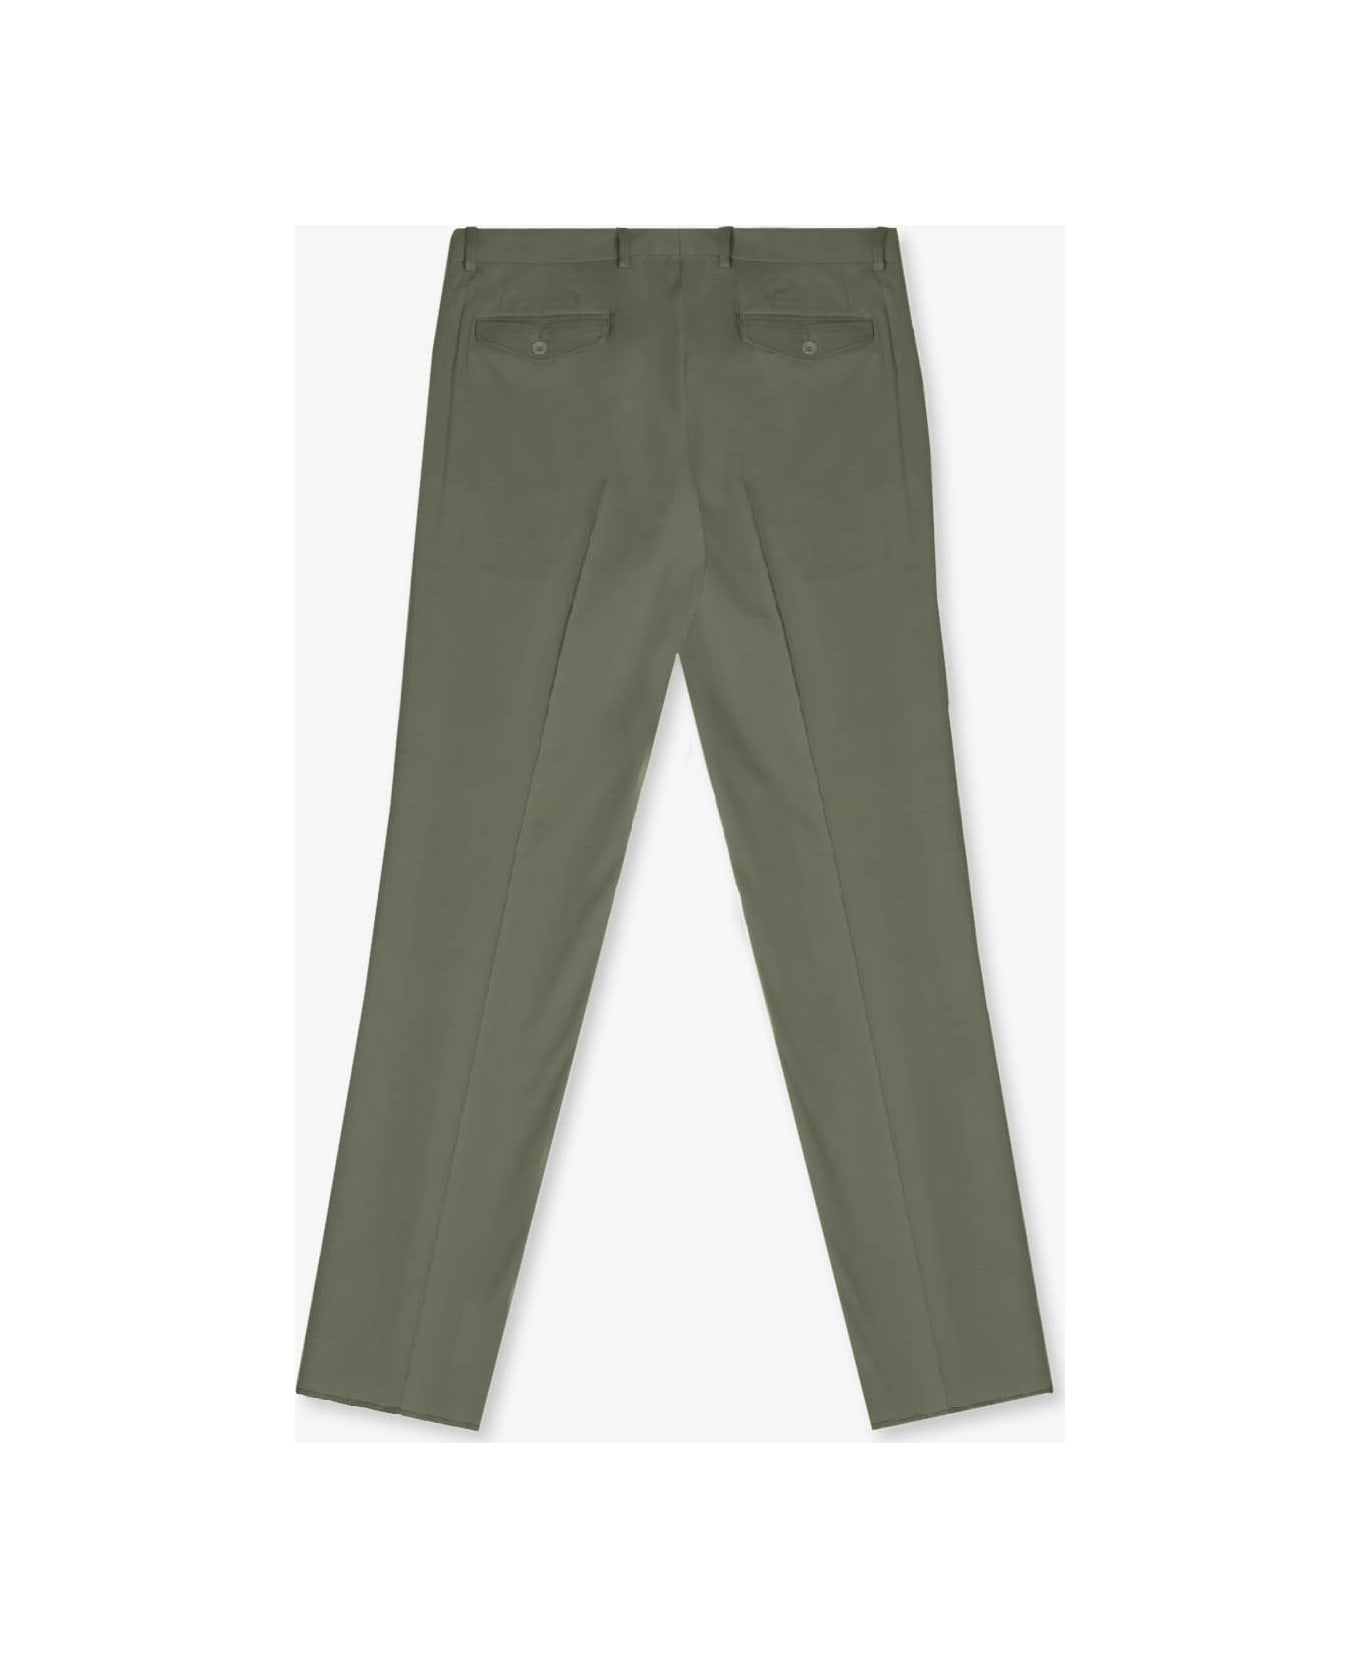 Larusmiani Chino Sport Trousers Pants - Olive